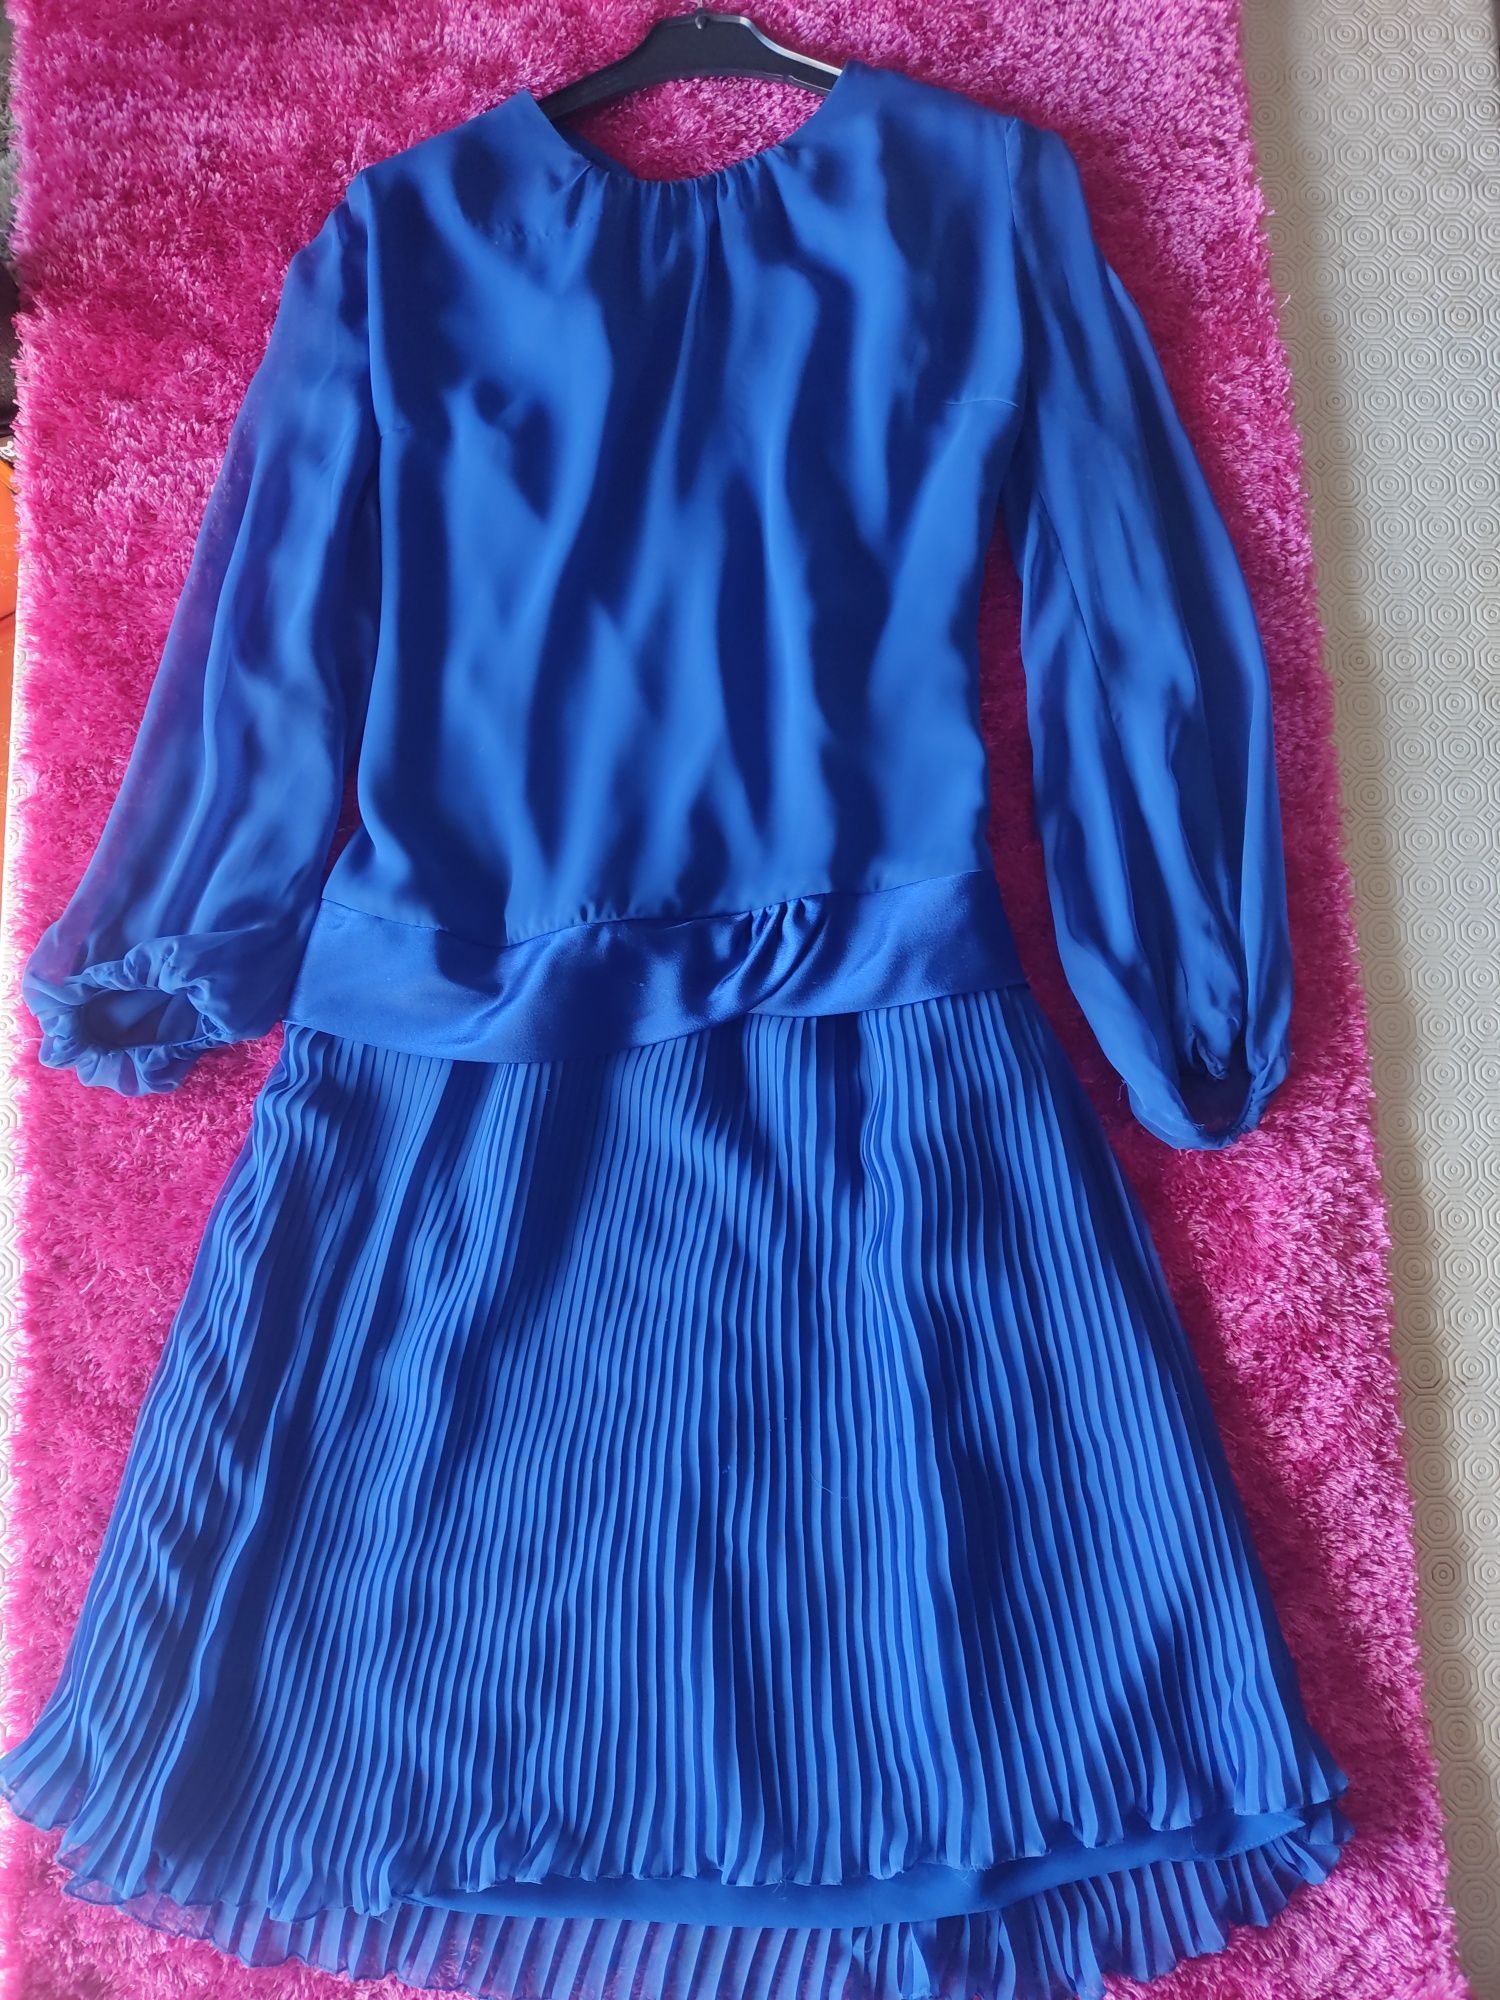 Vestido feminino azul